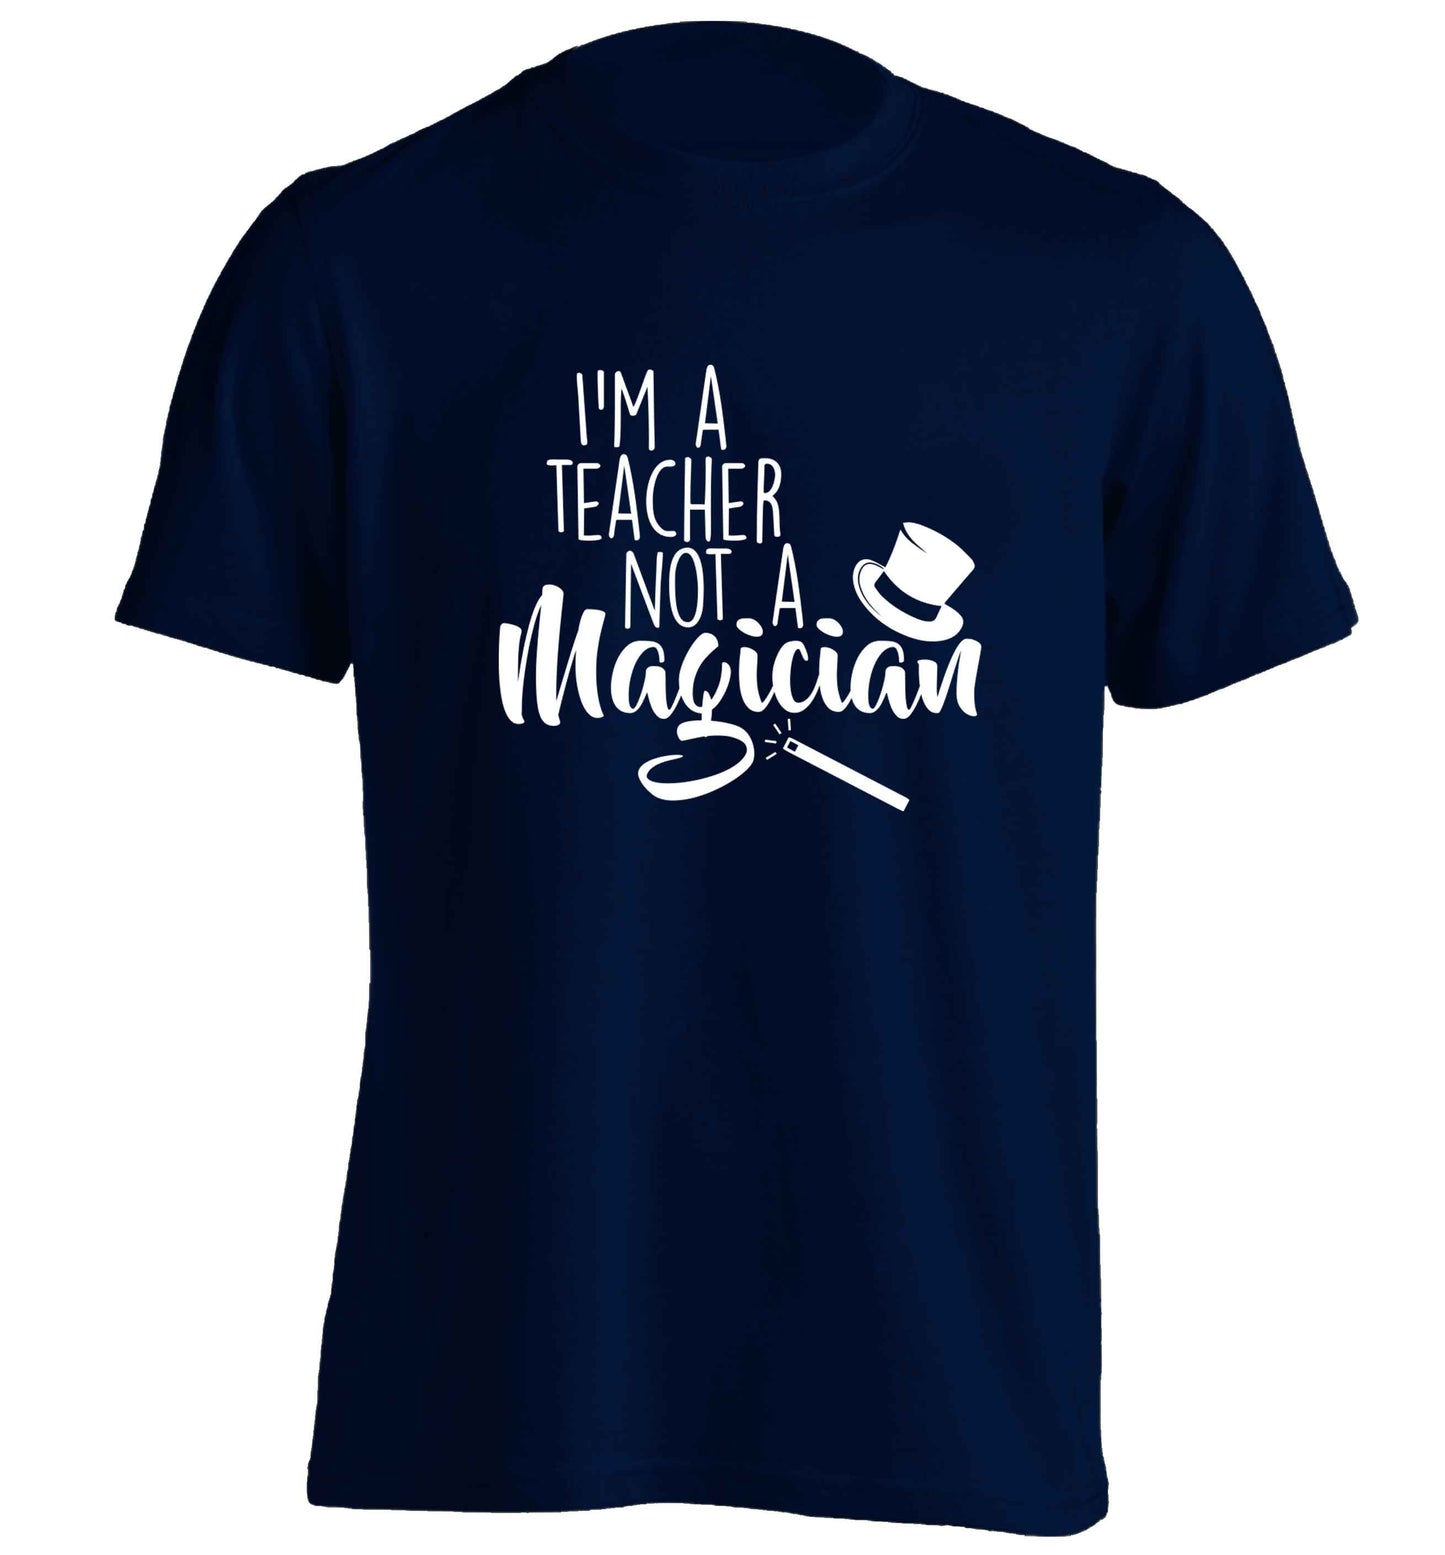 I'm a teacher not a magician adults unisex navy Tshirt 2XL